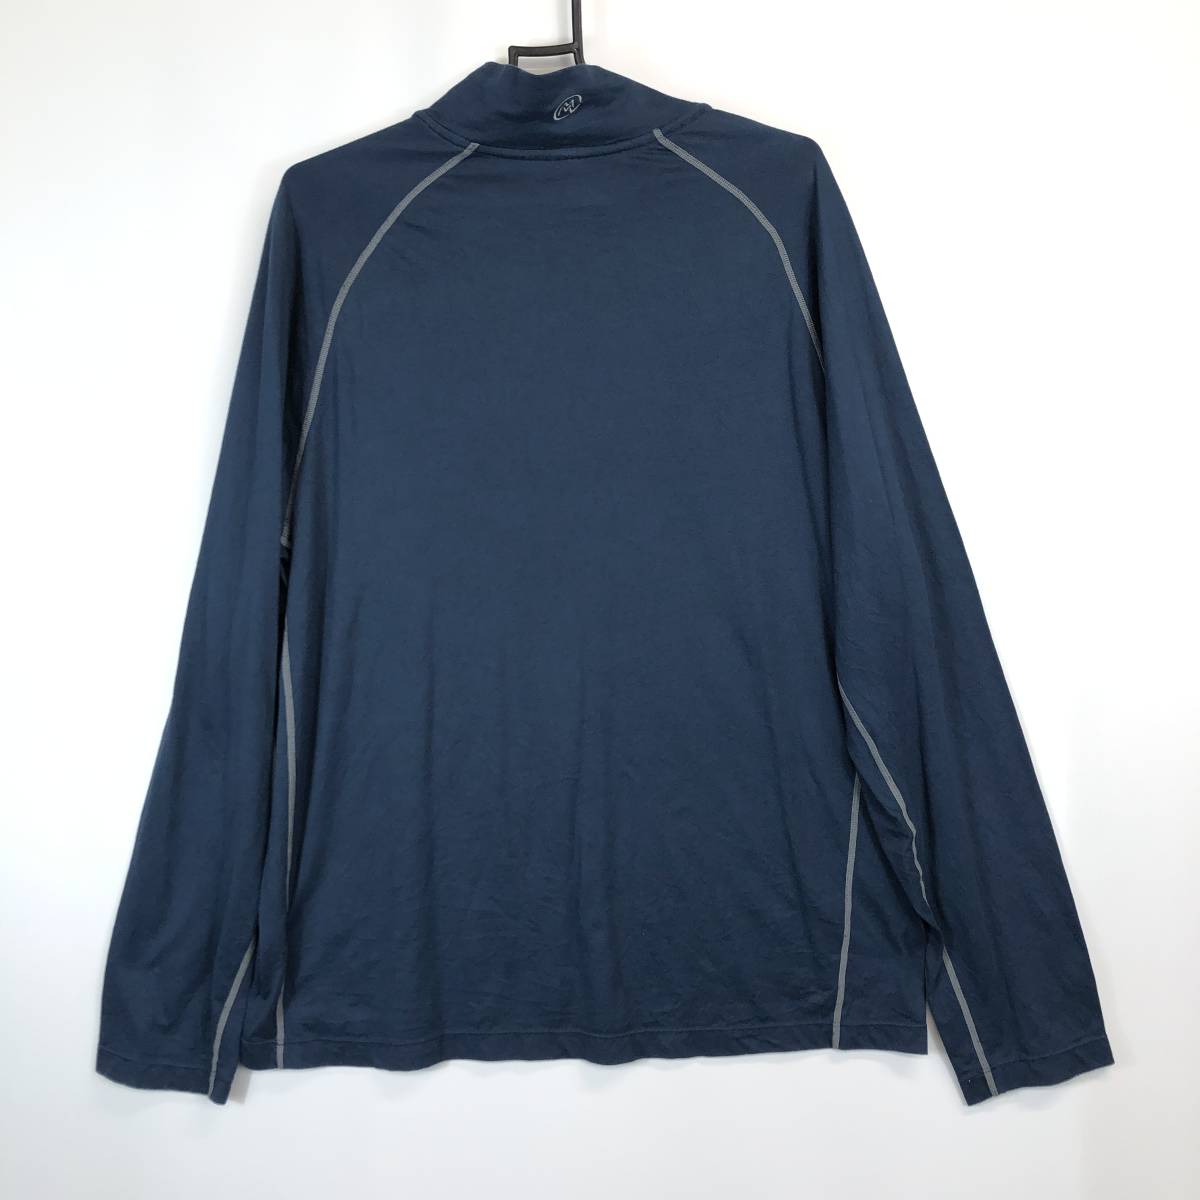  Cloudveil Cloudveil long sleeve half Zip shirt XL size 982296 USA old clothes 